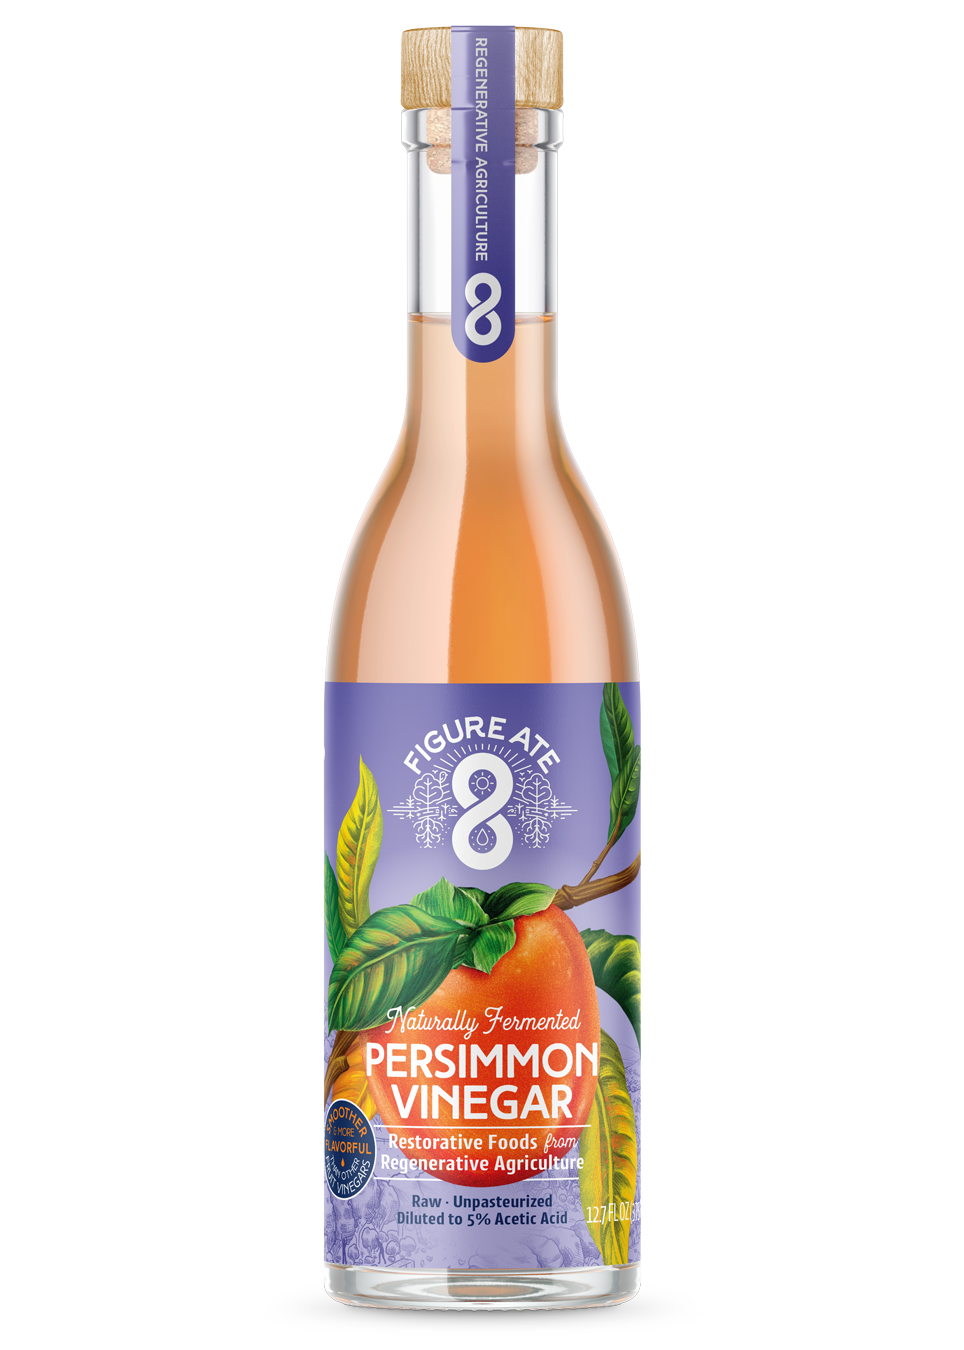 Naturally Fermented Persimmon Vinegar